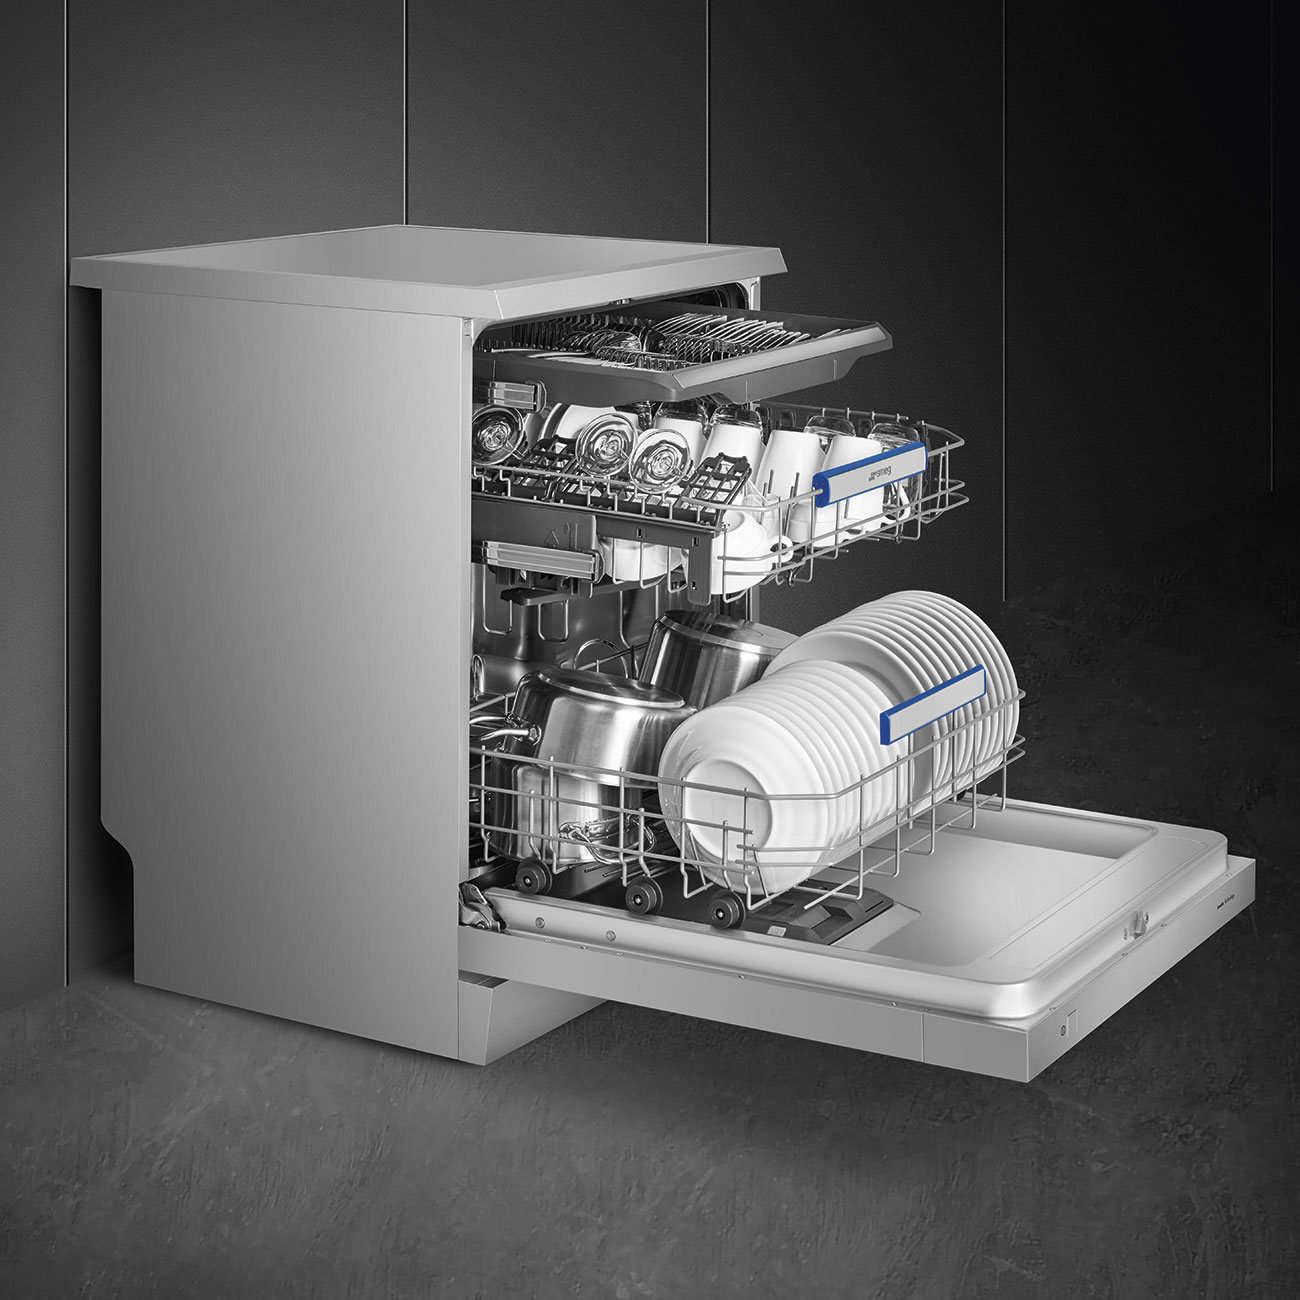 Free-standing dishwasher 60 cm Smeg_2